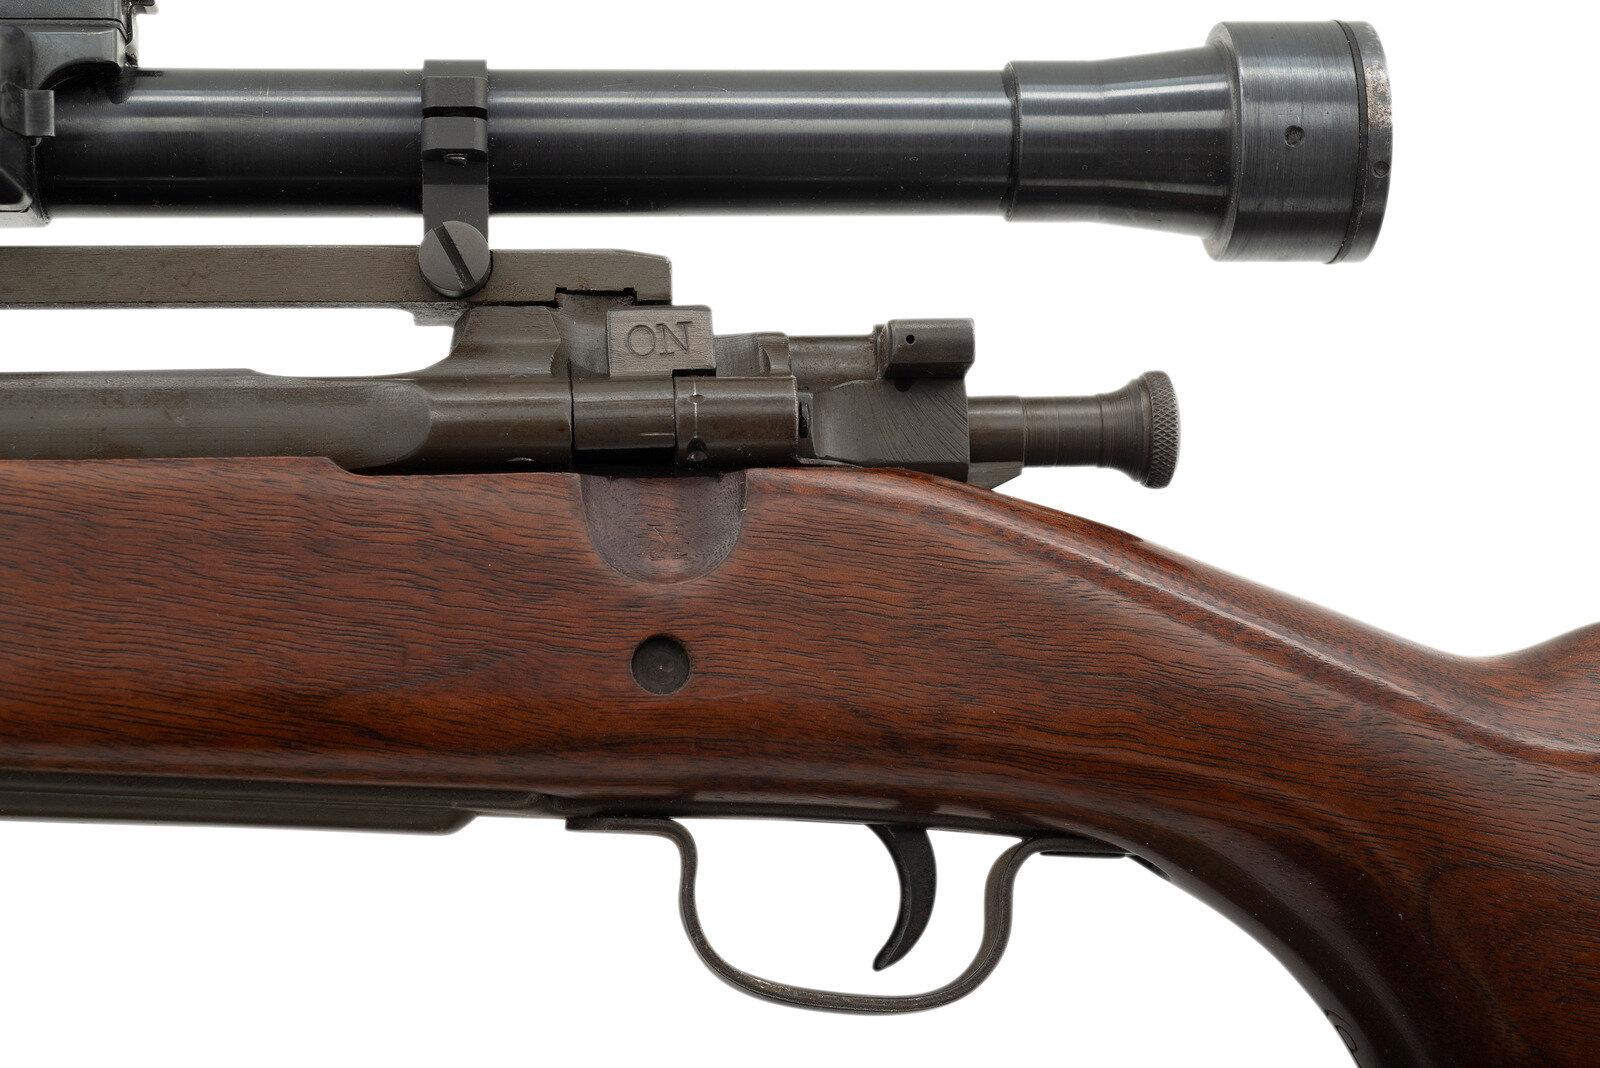 ** Remington U.S. Model 1903-A4 Sniper Rifle with M84 Scope